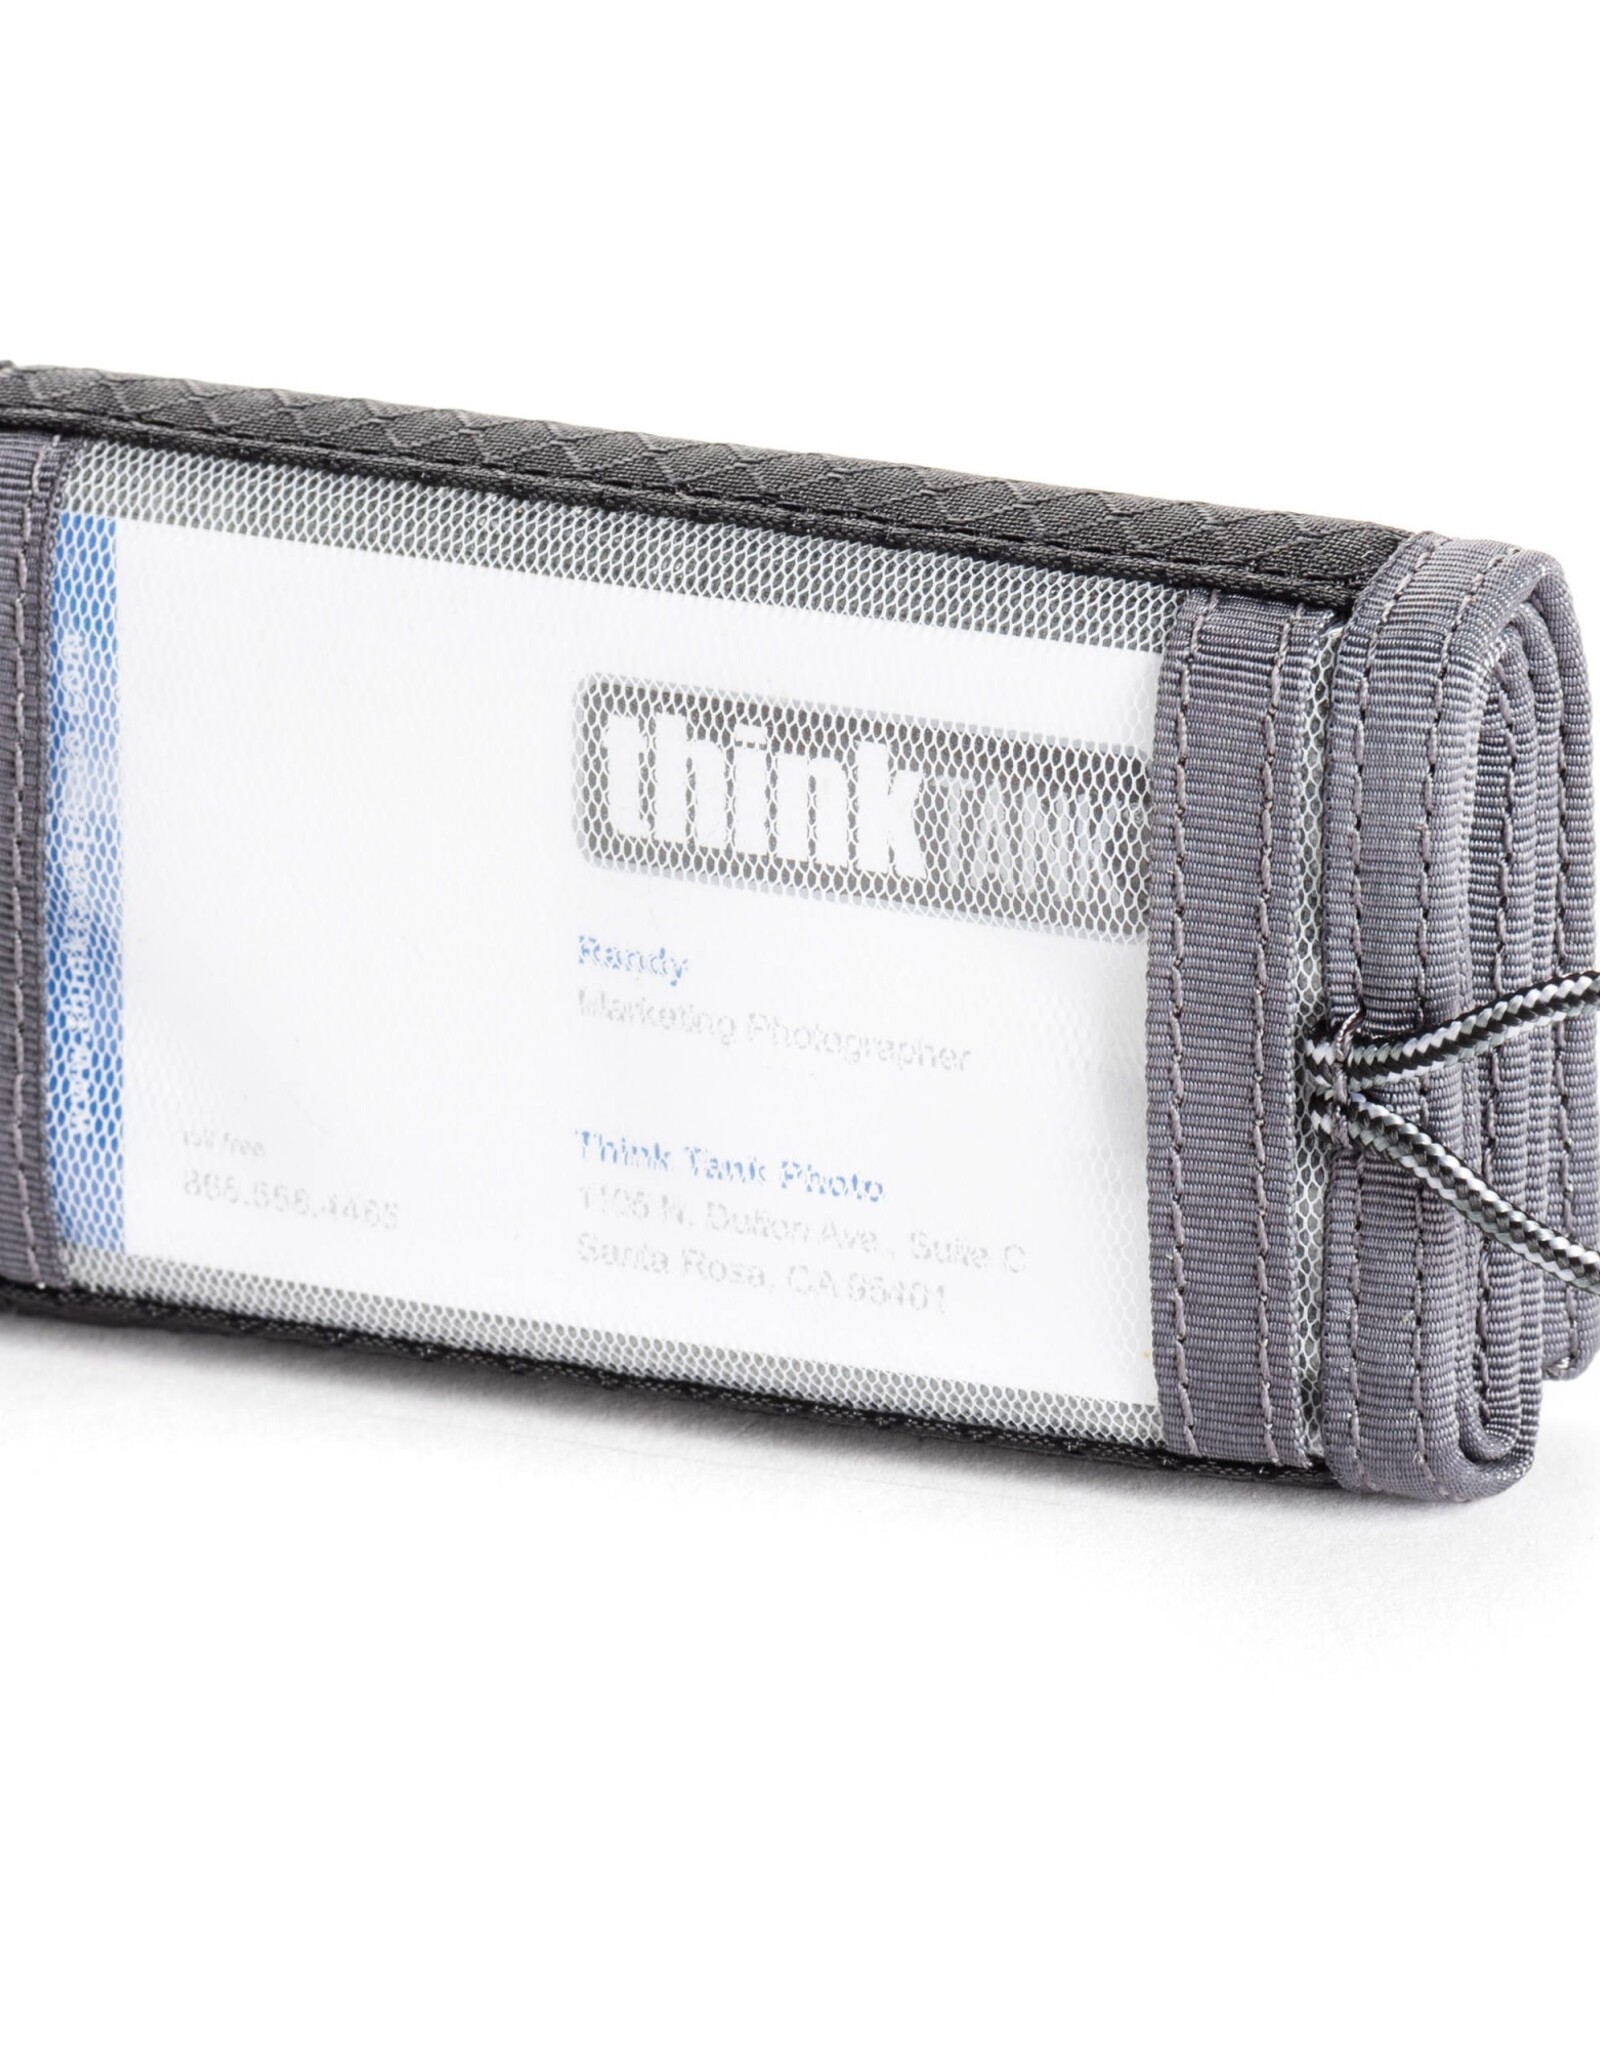 Think Tank Pixel Pocket Rocket